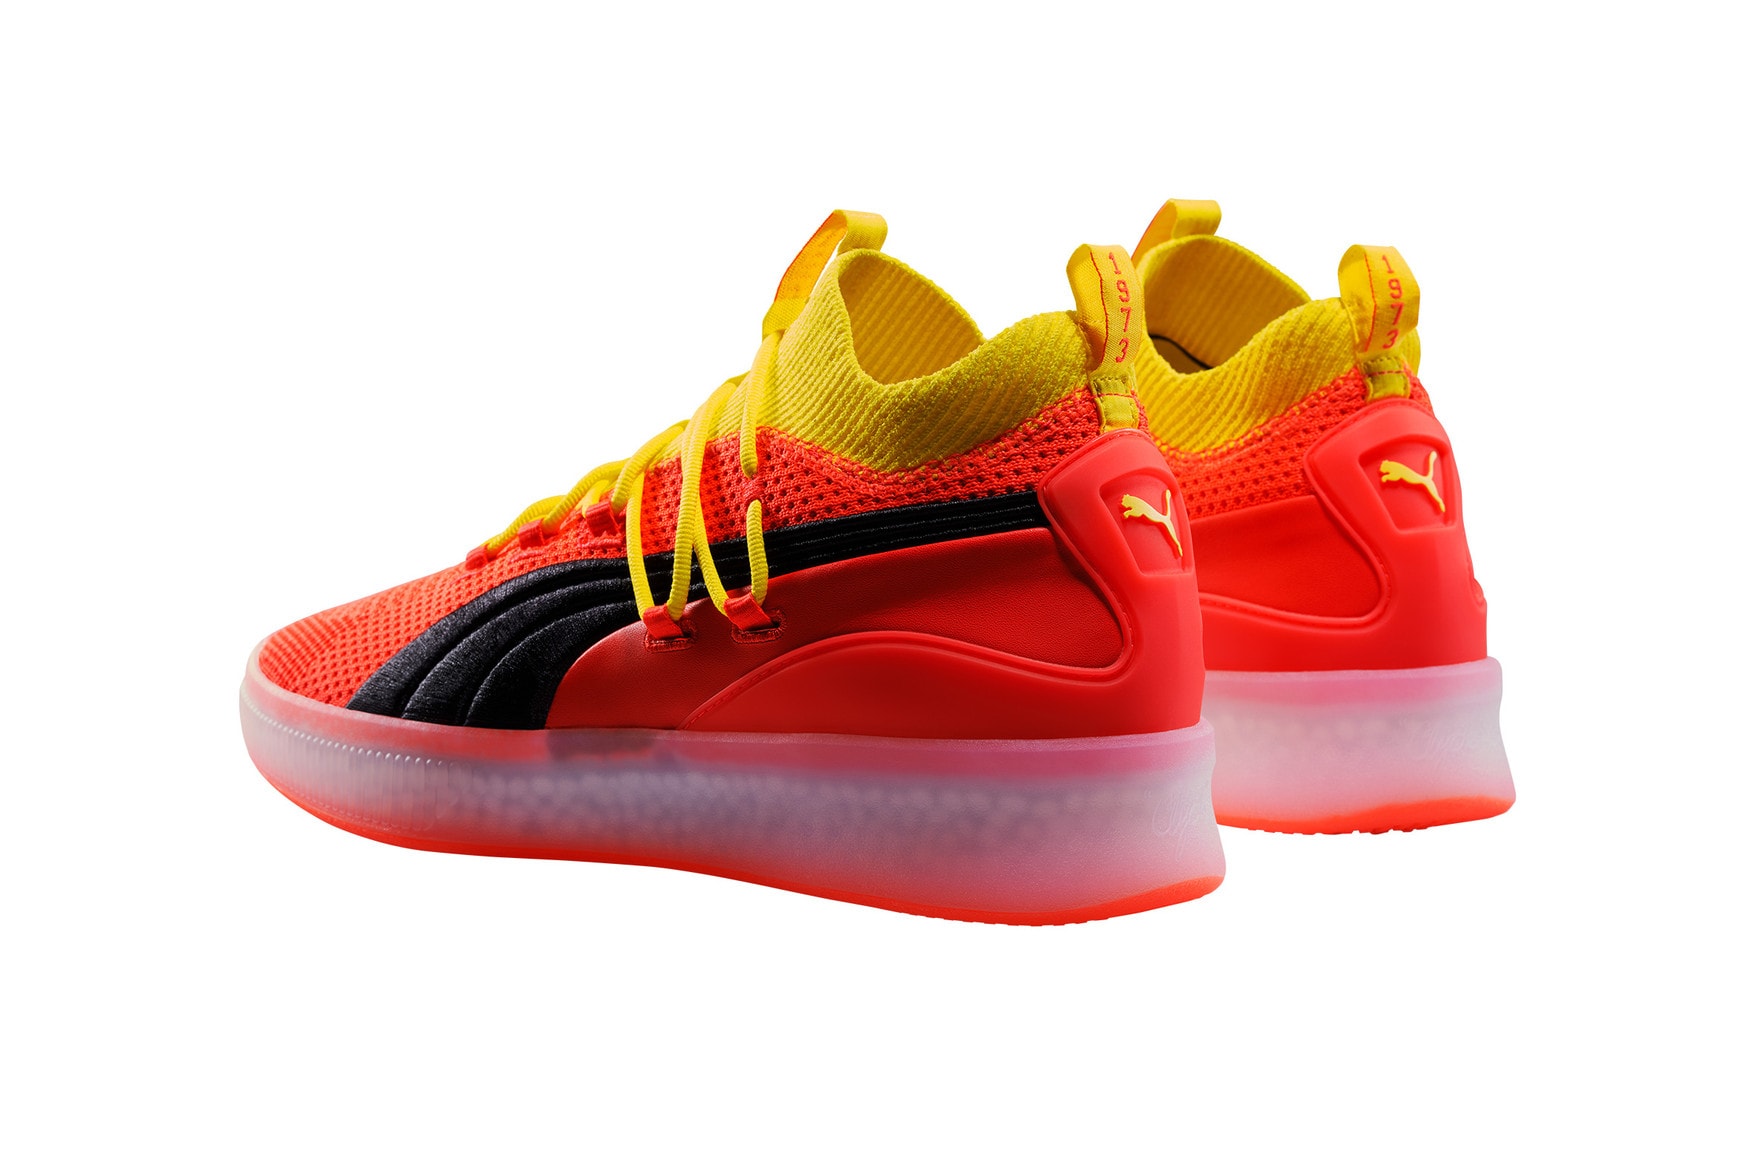 PUMA 最新籃球鞋 Clyde Court Disrupt 正式發布